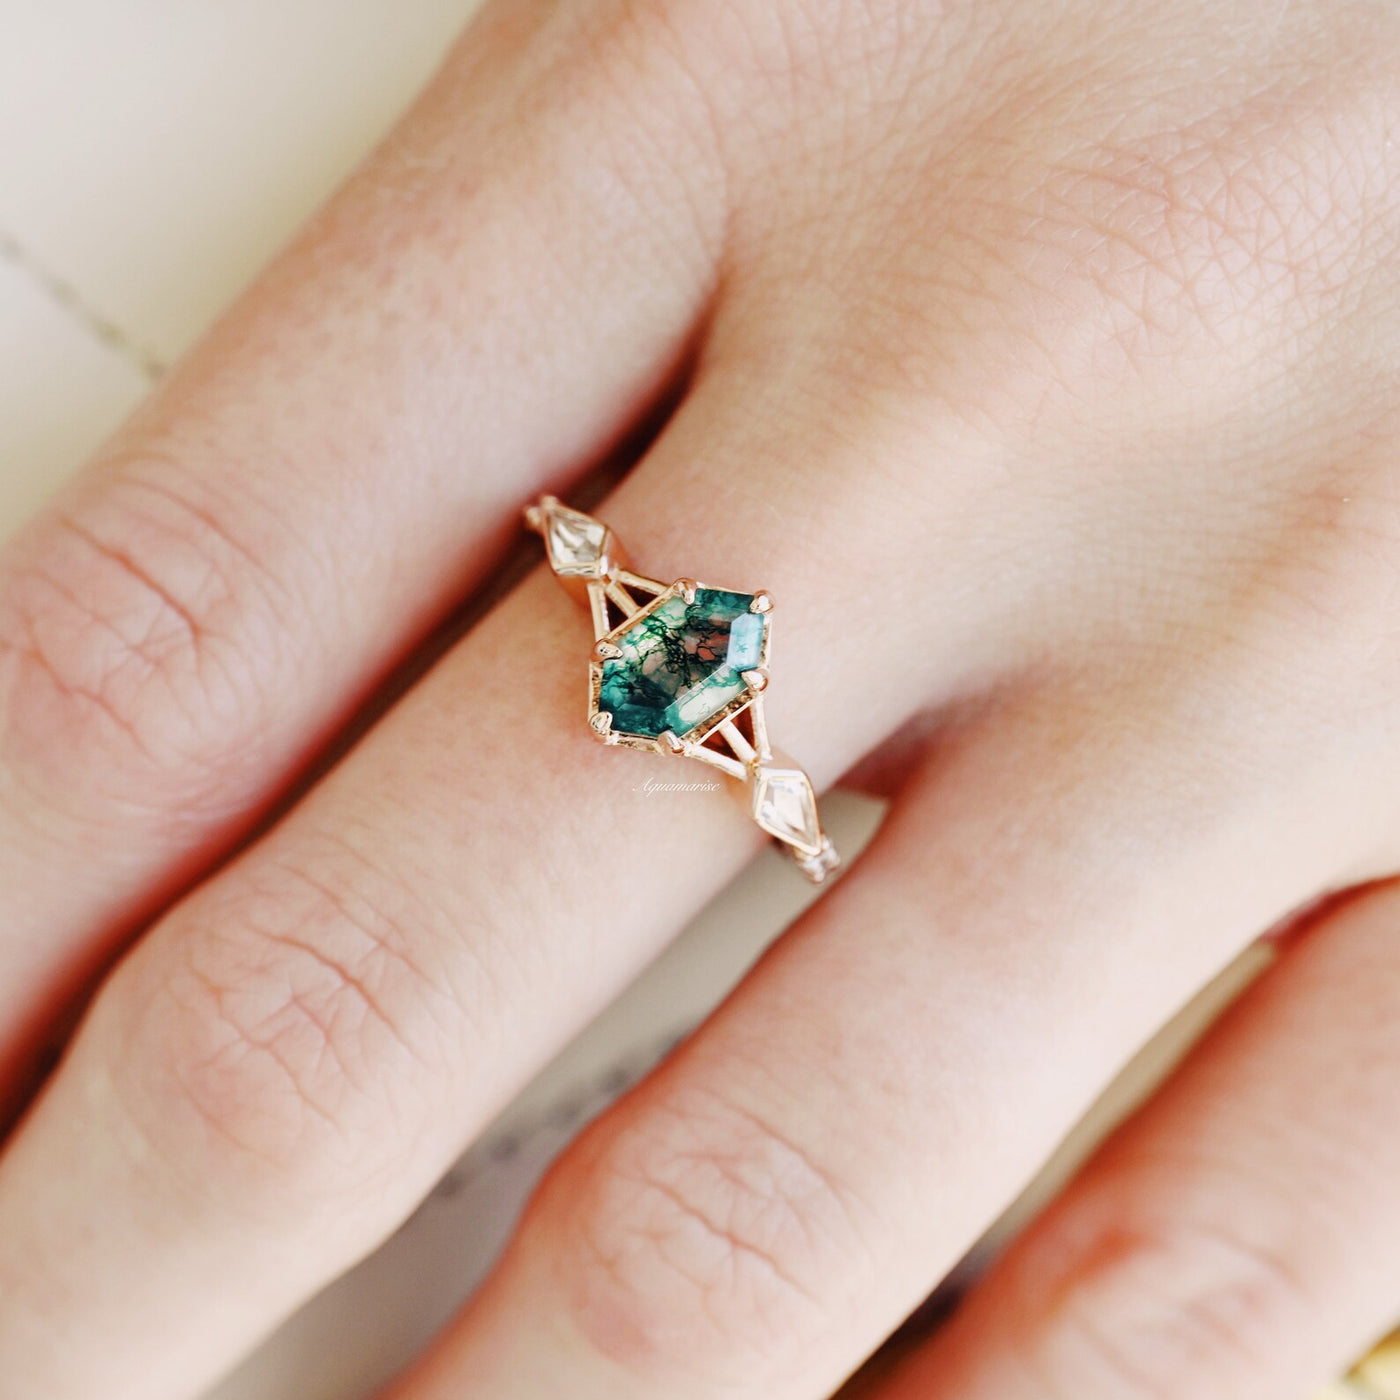 Celtic Green Moss Agate Ring For Women- 14K Rose Gold Vermeil Natural Agate Engagement Ring- Hexagon Promise Ring- Anniversary Gift For Her